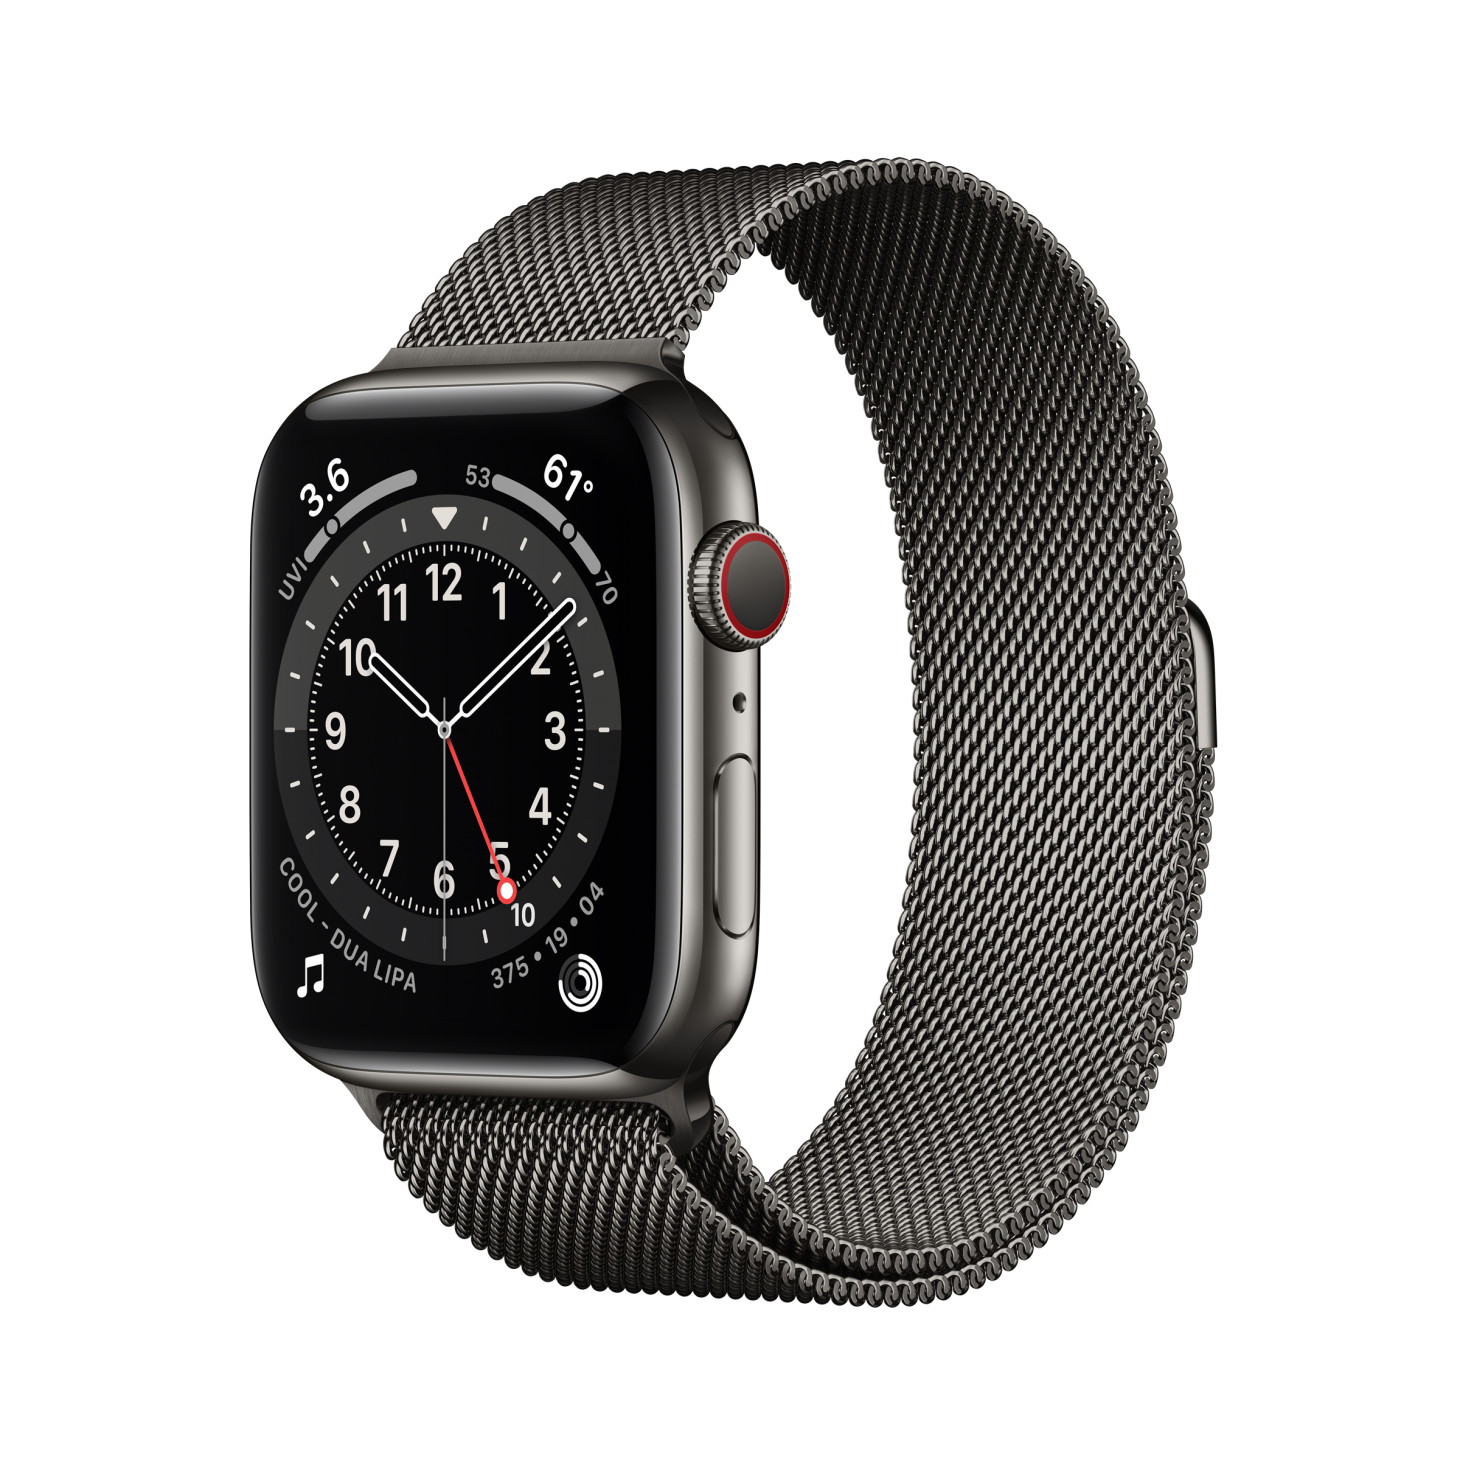 Black Apple Watch Series 5 PNG Transparent Image